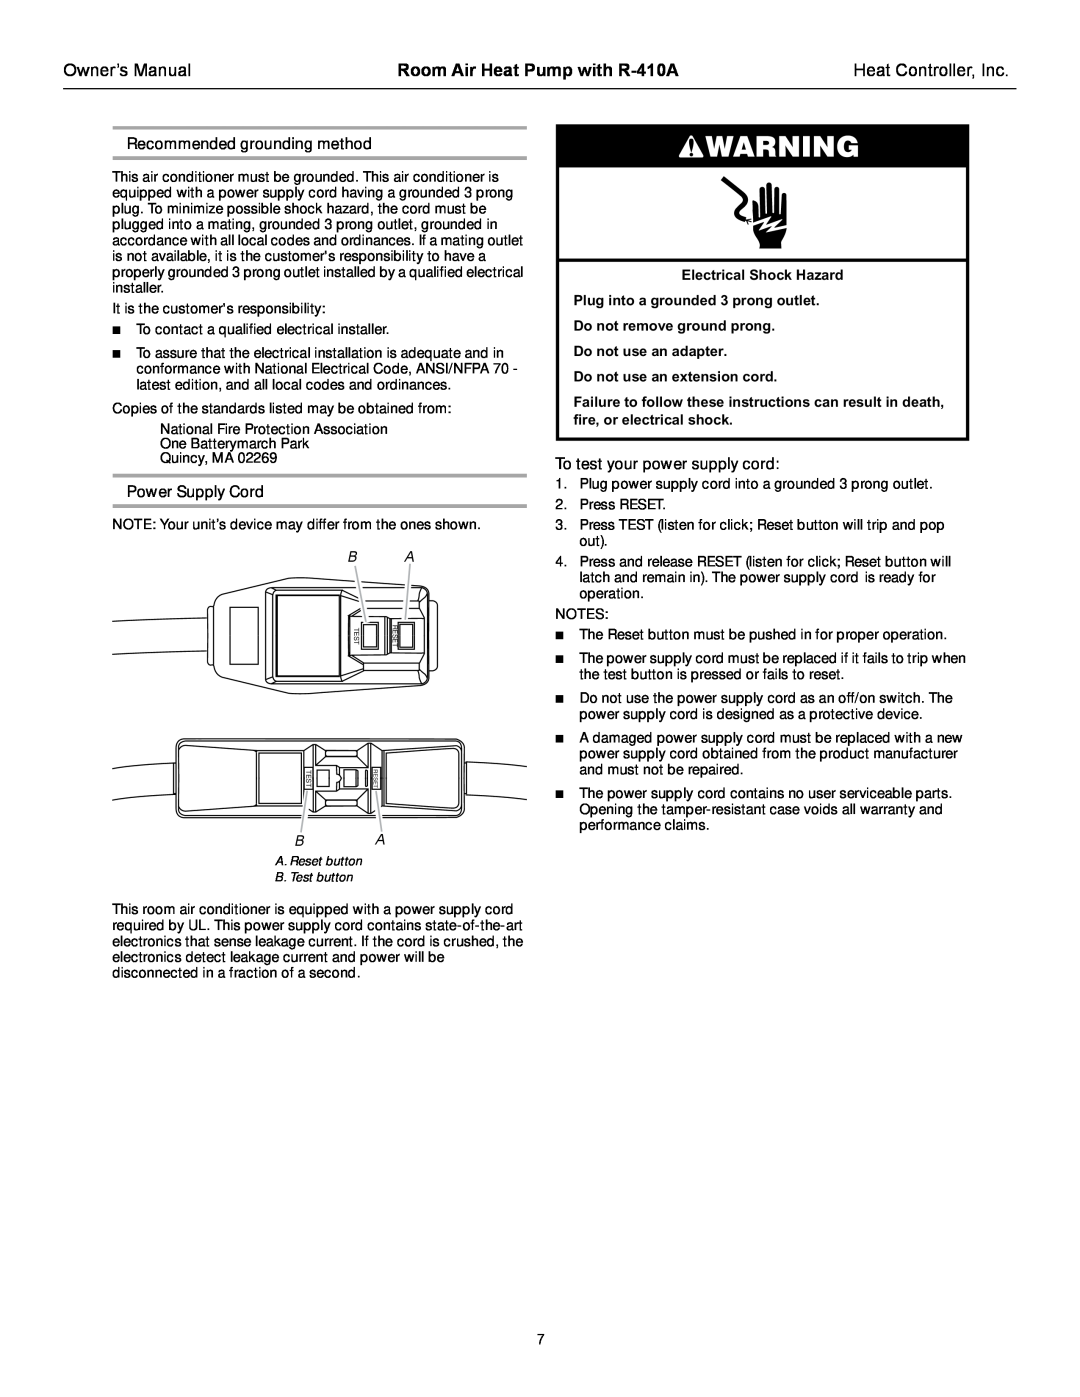 Heat Controller RAH-123G owner manual Room Air Heat Pump with R-410A, Heat Controller, Inc, Electrical Shock Hazard 